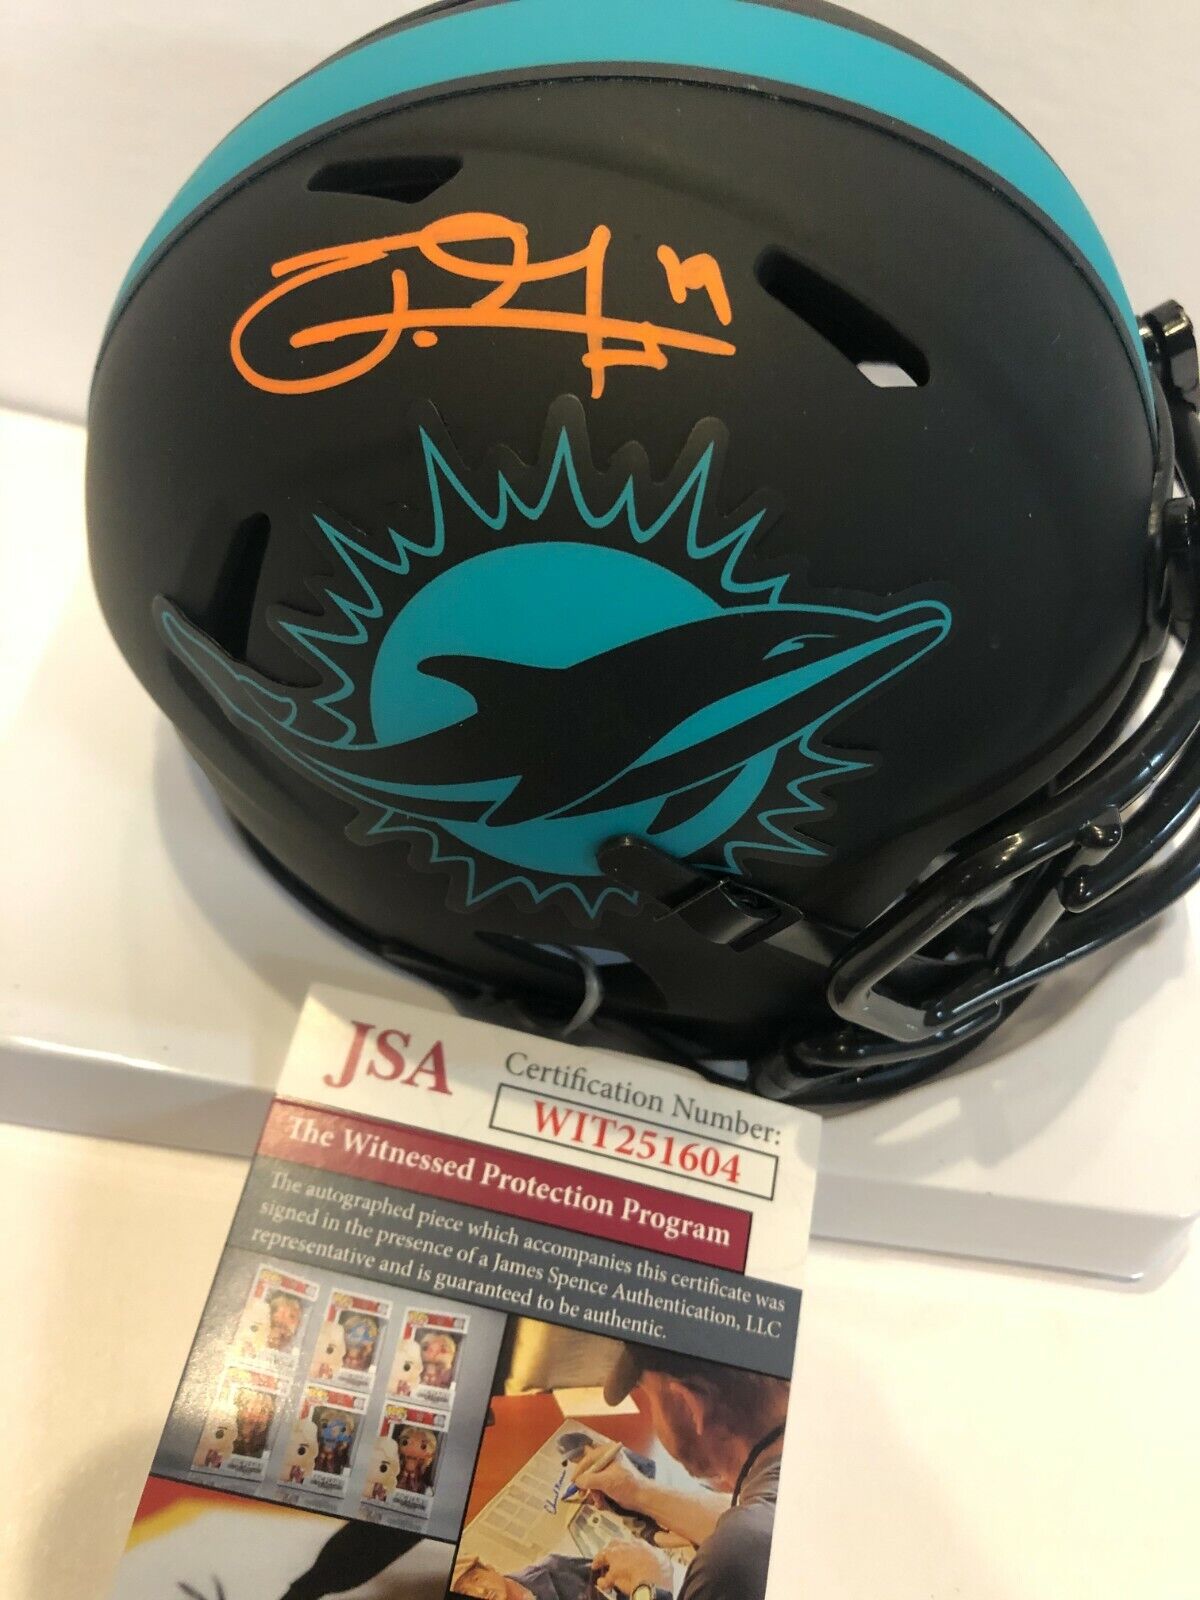 MVP Authentics Jakeem Grant Autographed Signed Miami Dolphins Eclipse Mini Helmet Jsa Coa 107.10 sports jersey framing , jersey framing